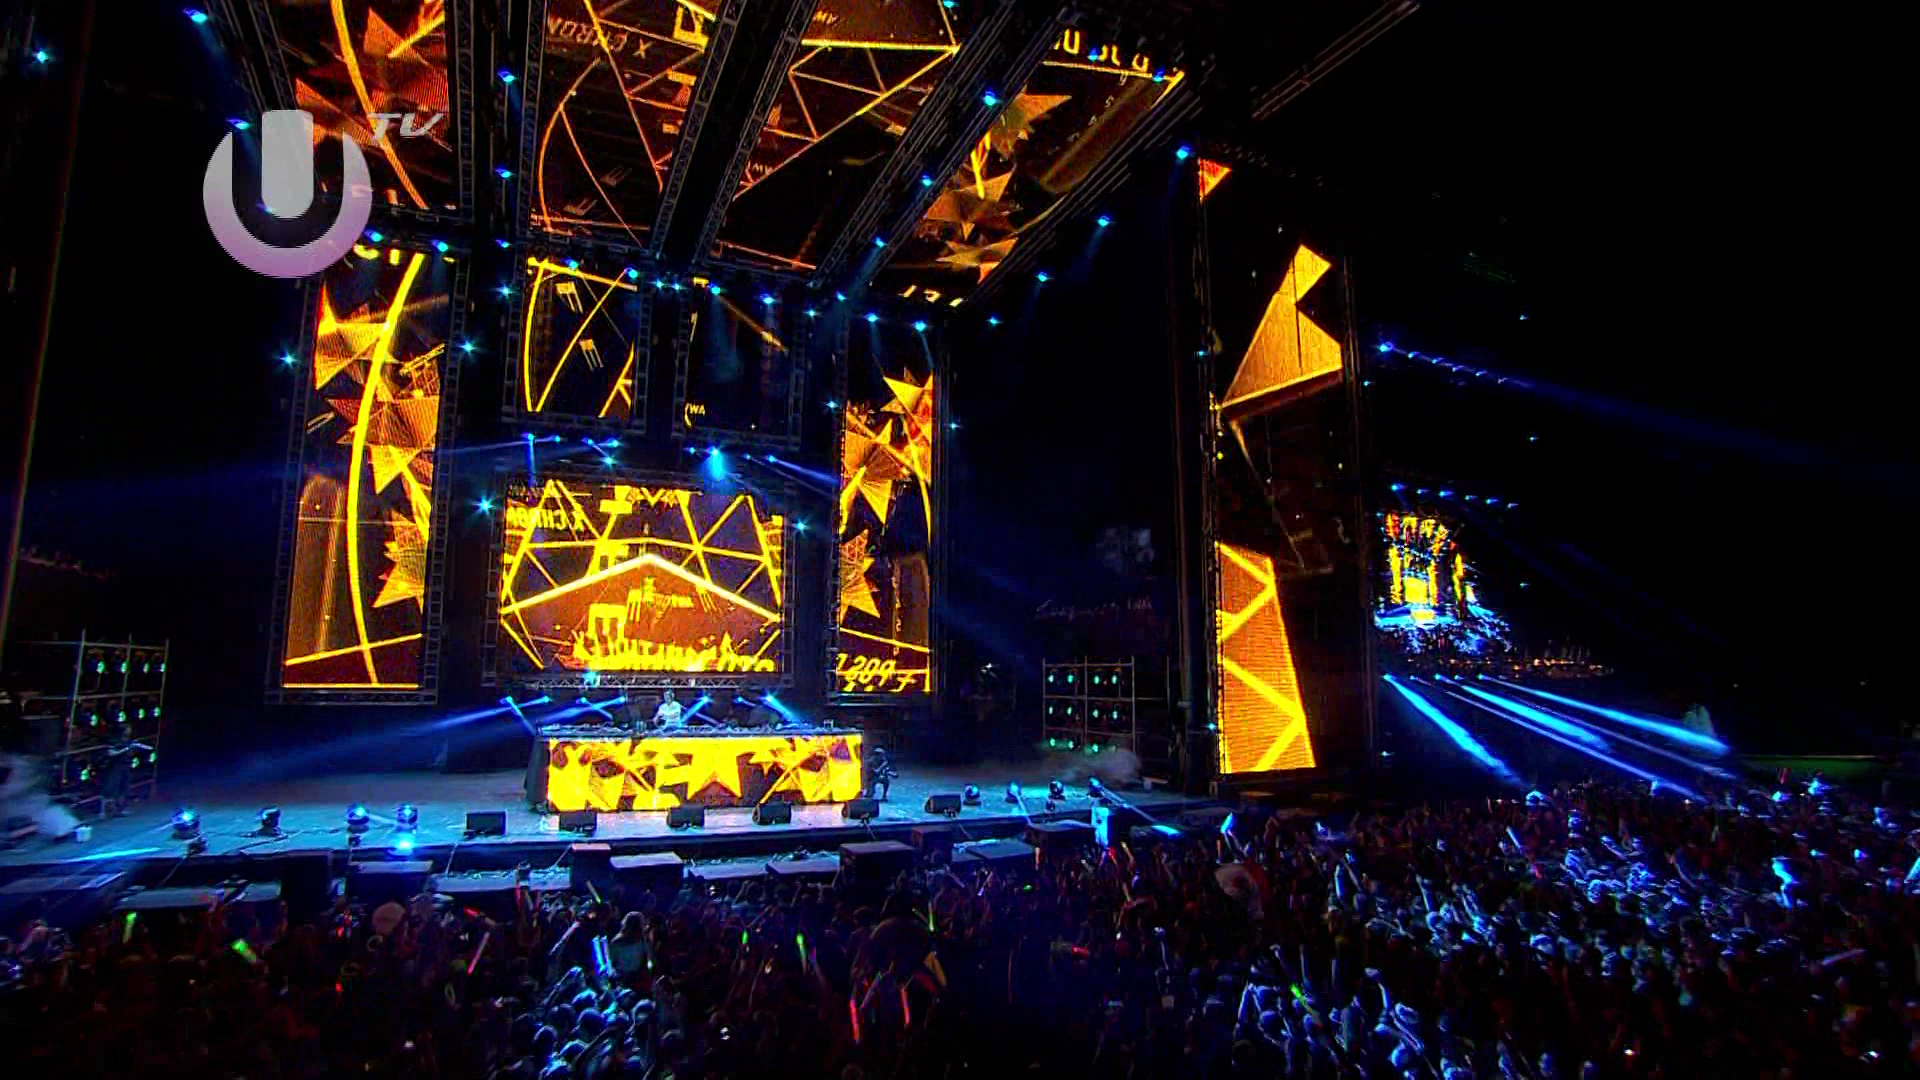 Armin van Buuren / LIVE in Miami USA 25 March / Ultra Music Festival (2012) HDTVRip